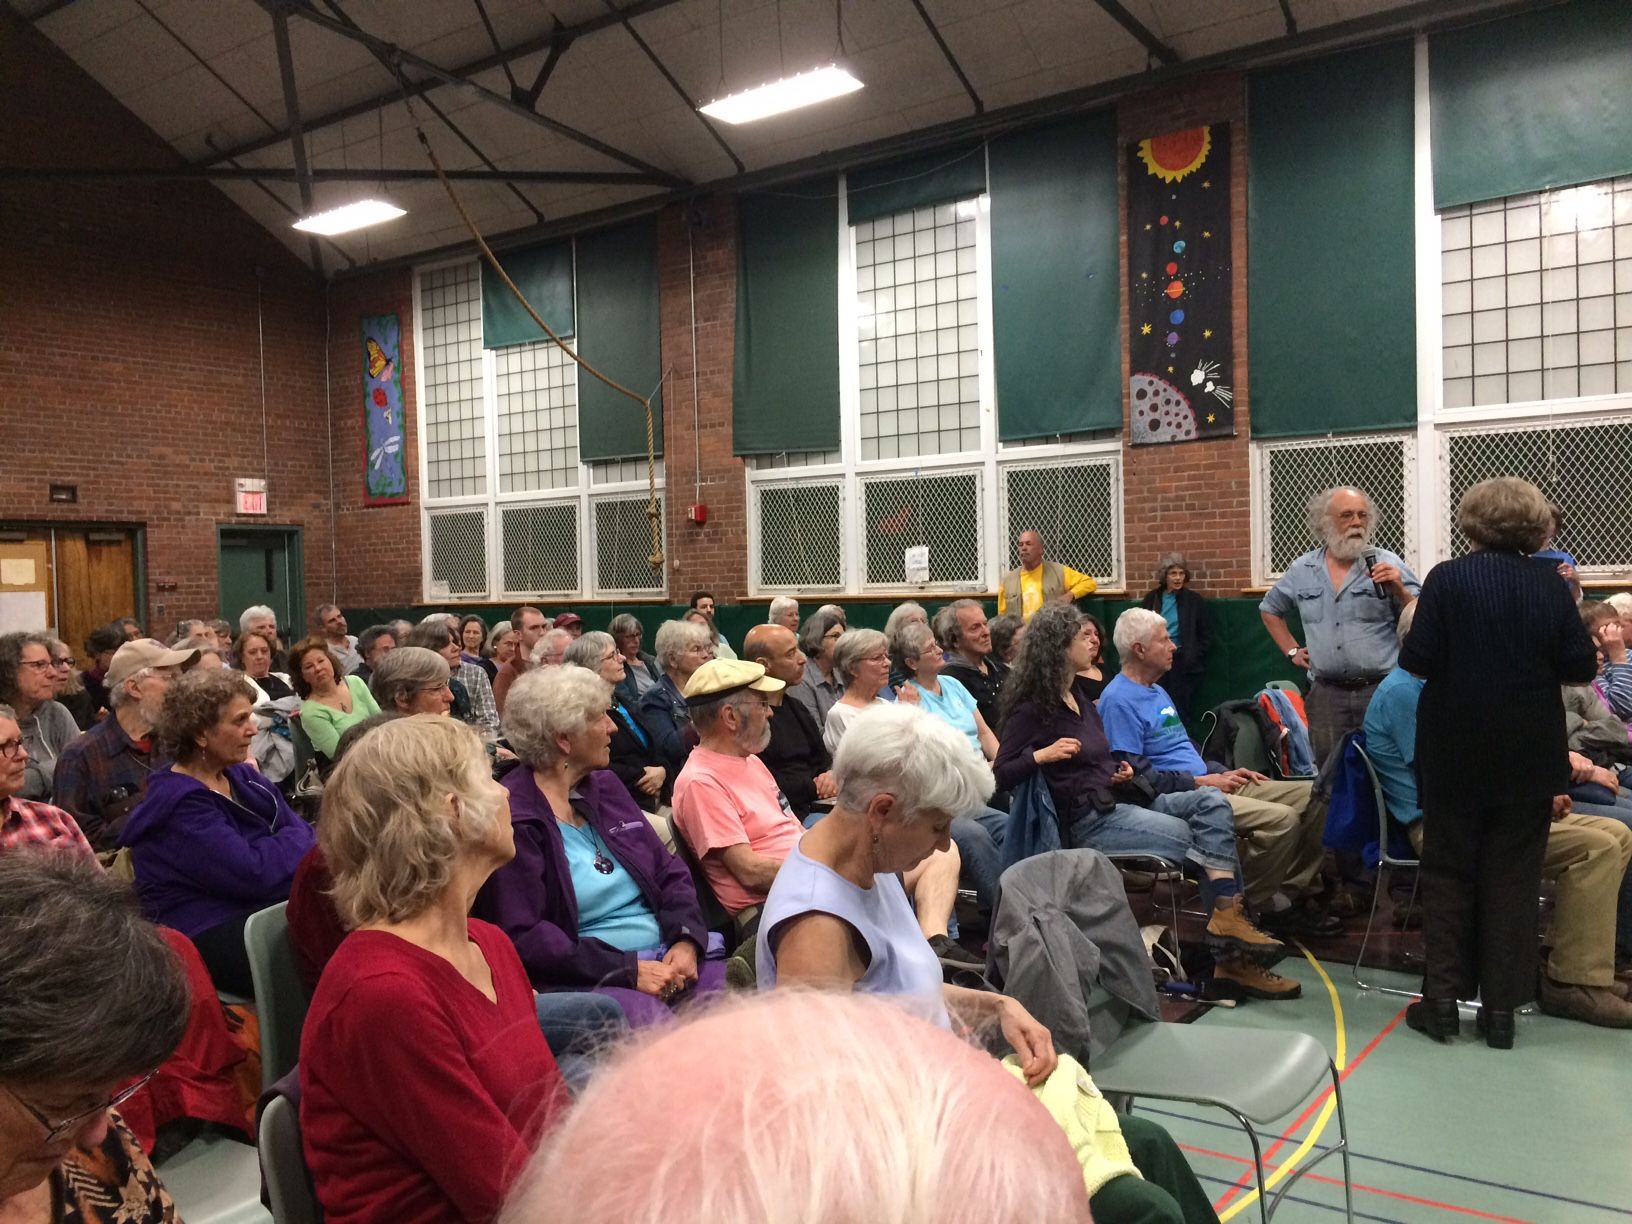 Hands Across the Hills public meeting in Leverett, Mass. Image by Richie Davis. Massachusetts, 2018.